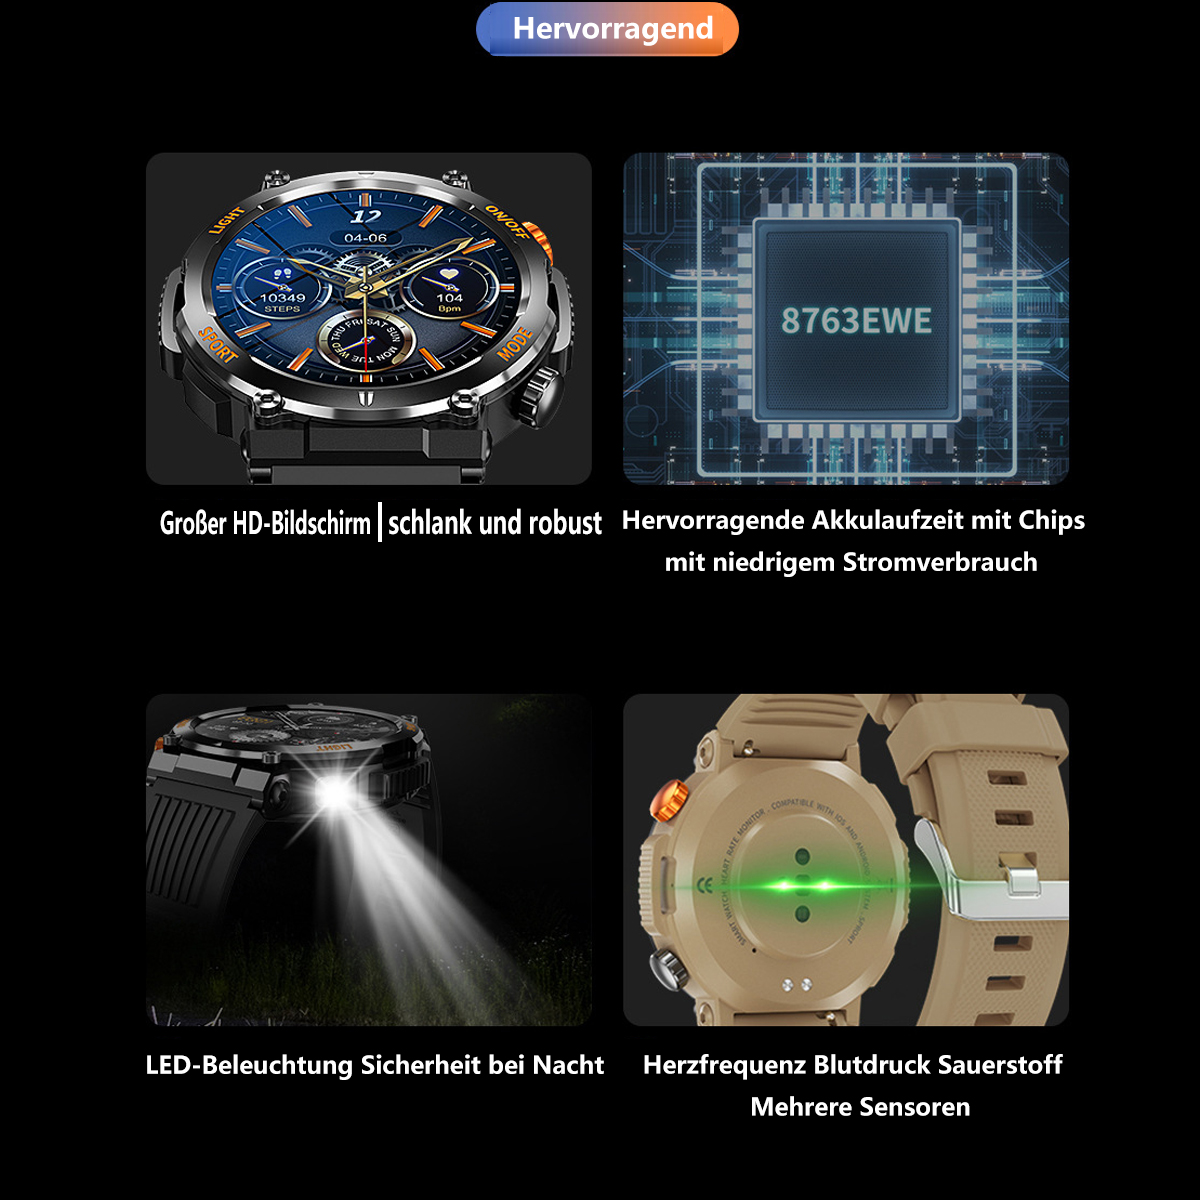 ENBAOXIN Smart Watch Kompass Schwarz Silikon, LED Beleuchtung Smartwatch Uhr Sprechende Herzfrequenz Schwarz Bluetooth Blutdruckmessgerät Silikon